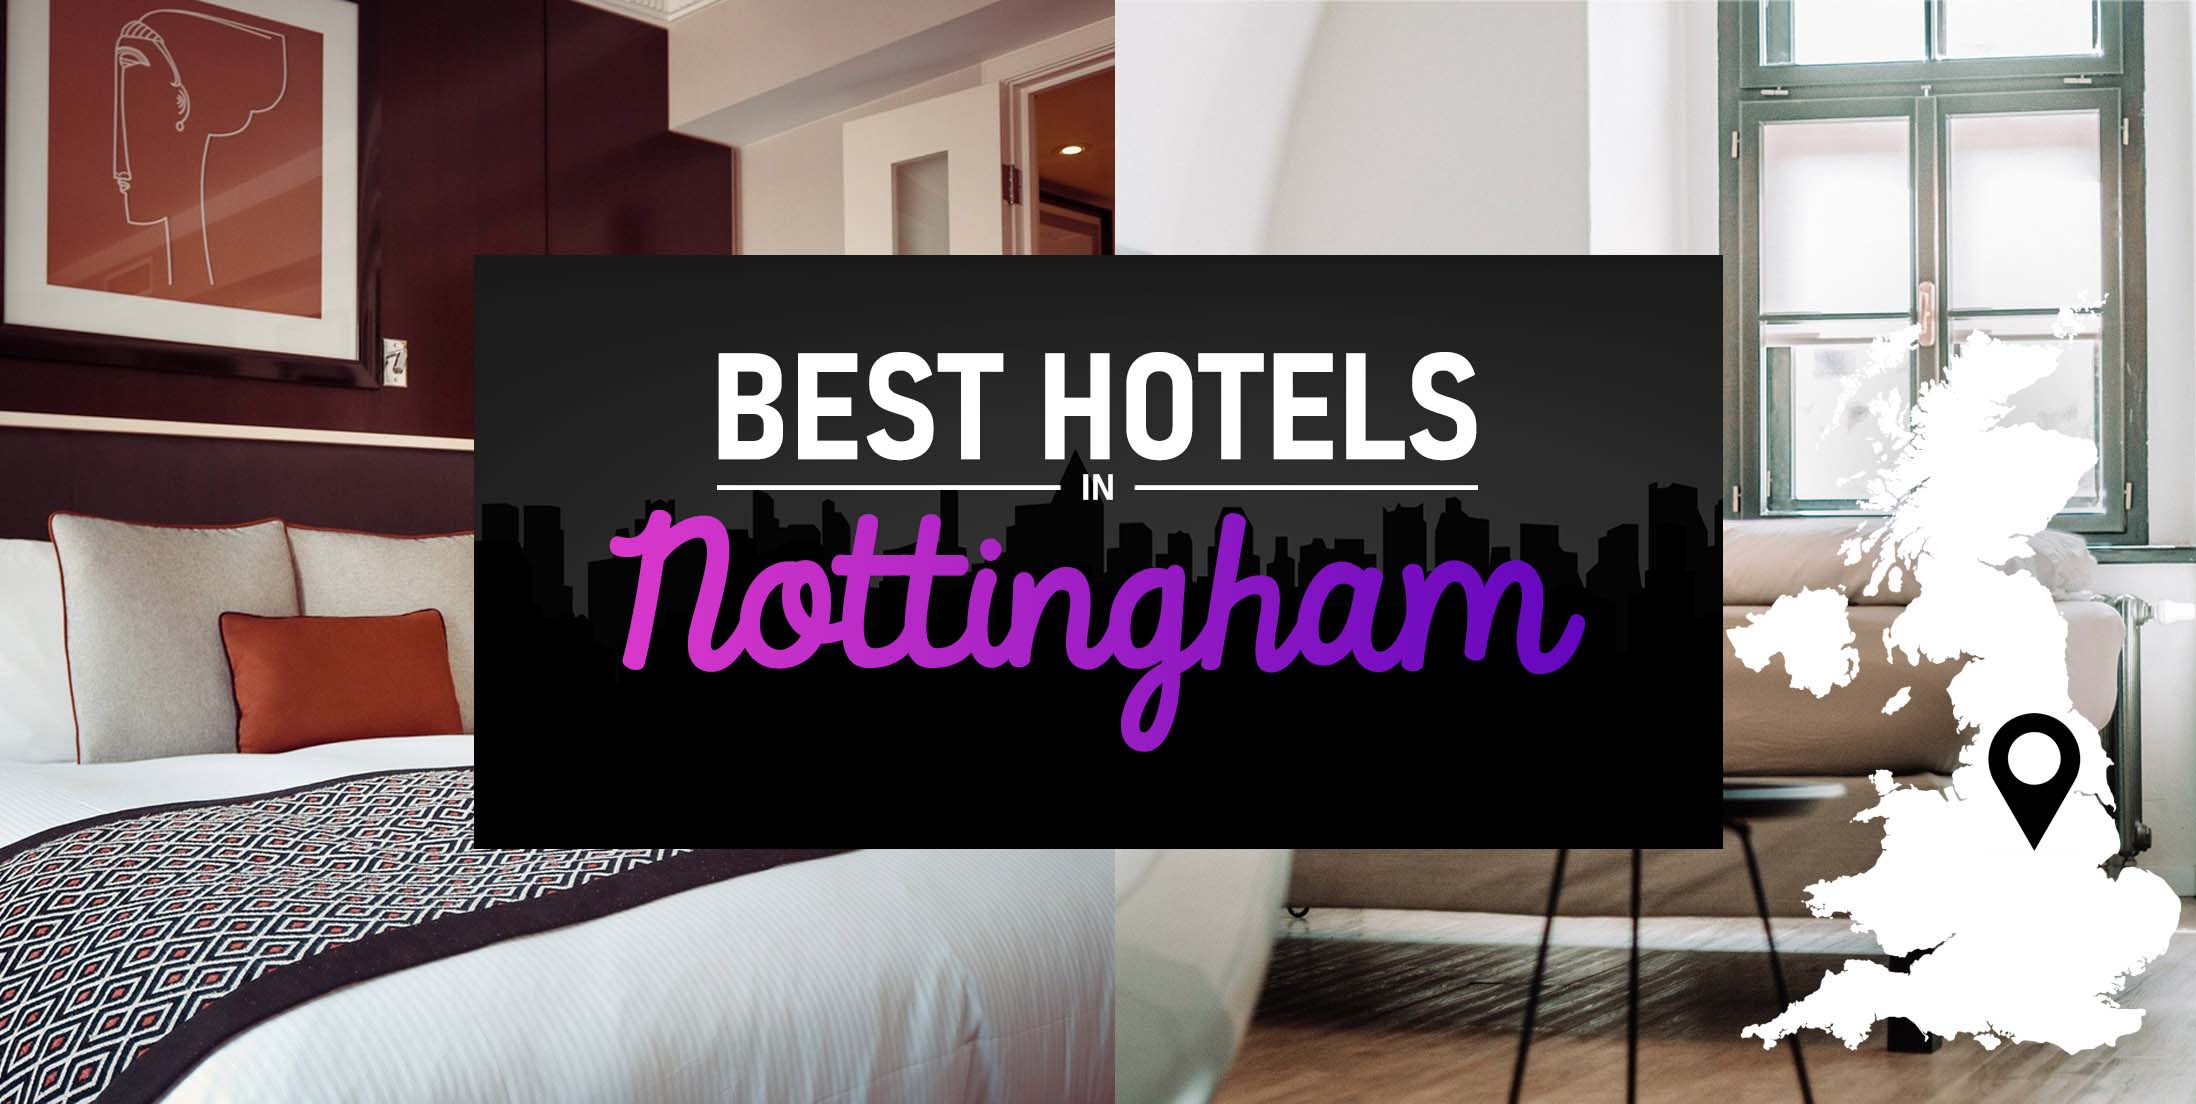 Best Hotels in Nottingham